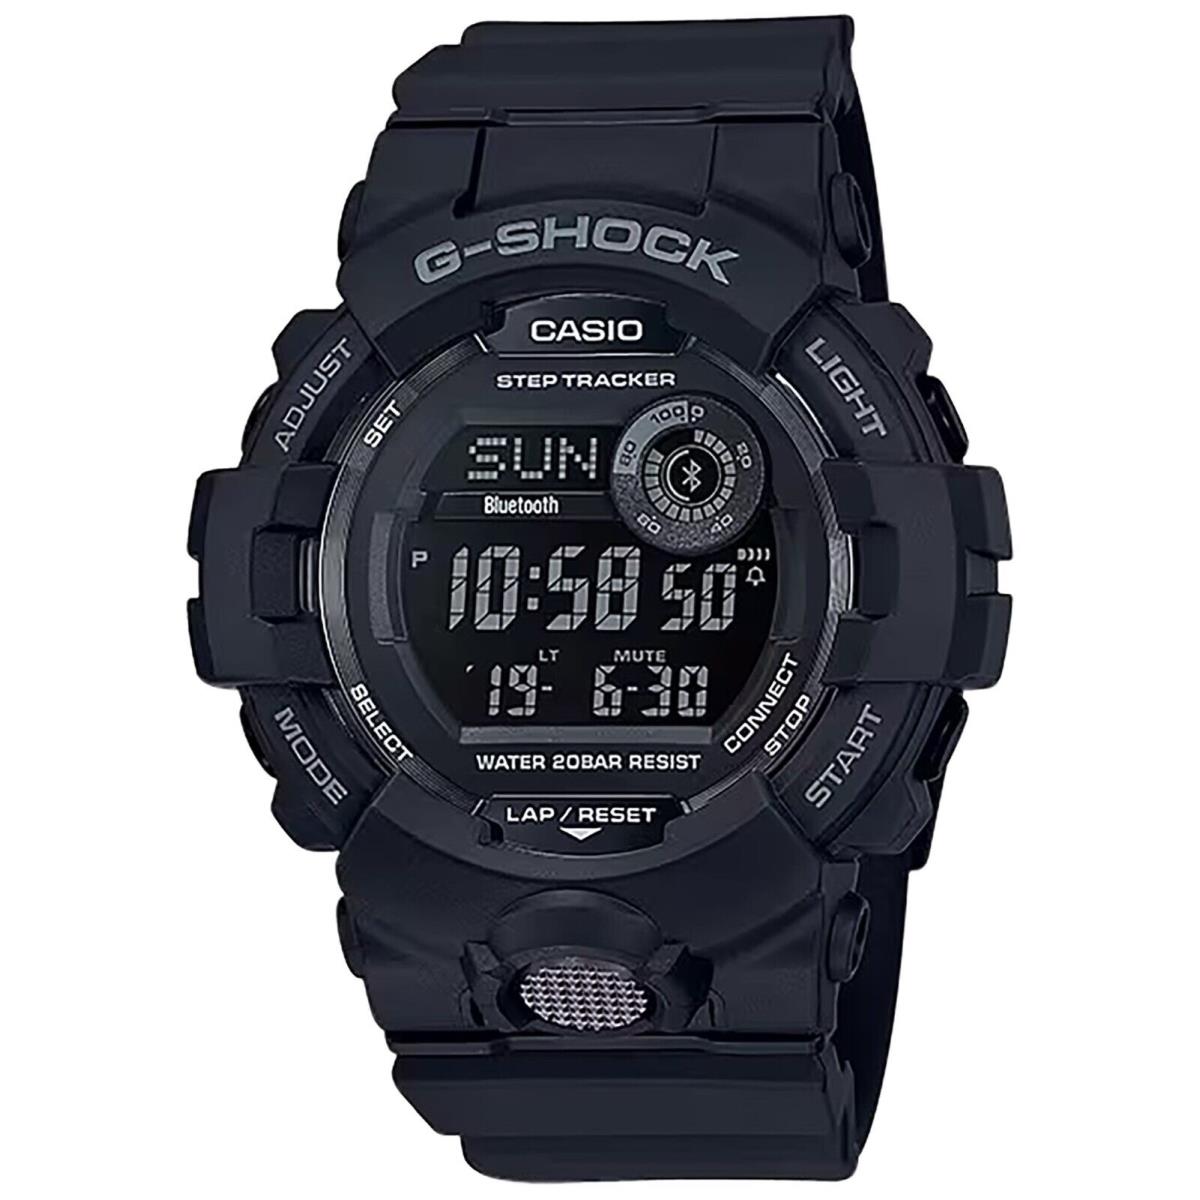 Casio Premier G-shock Perpetual Alarm World Time Chronograph Quartz Digital